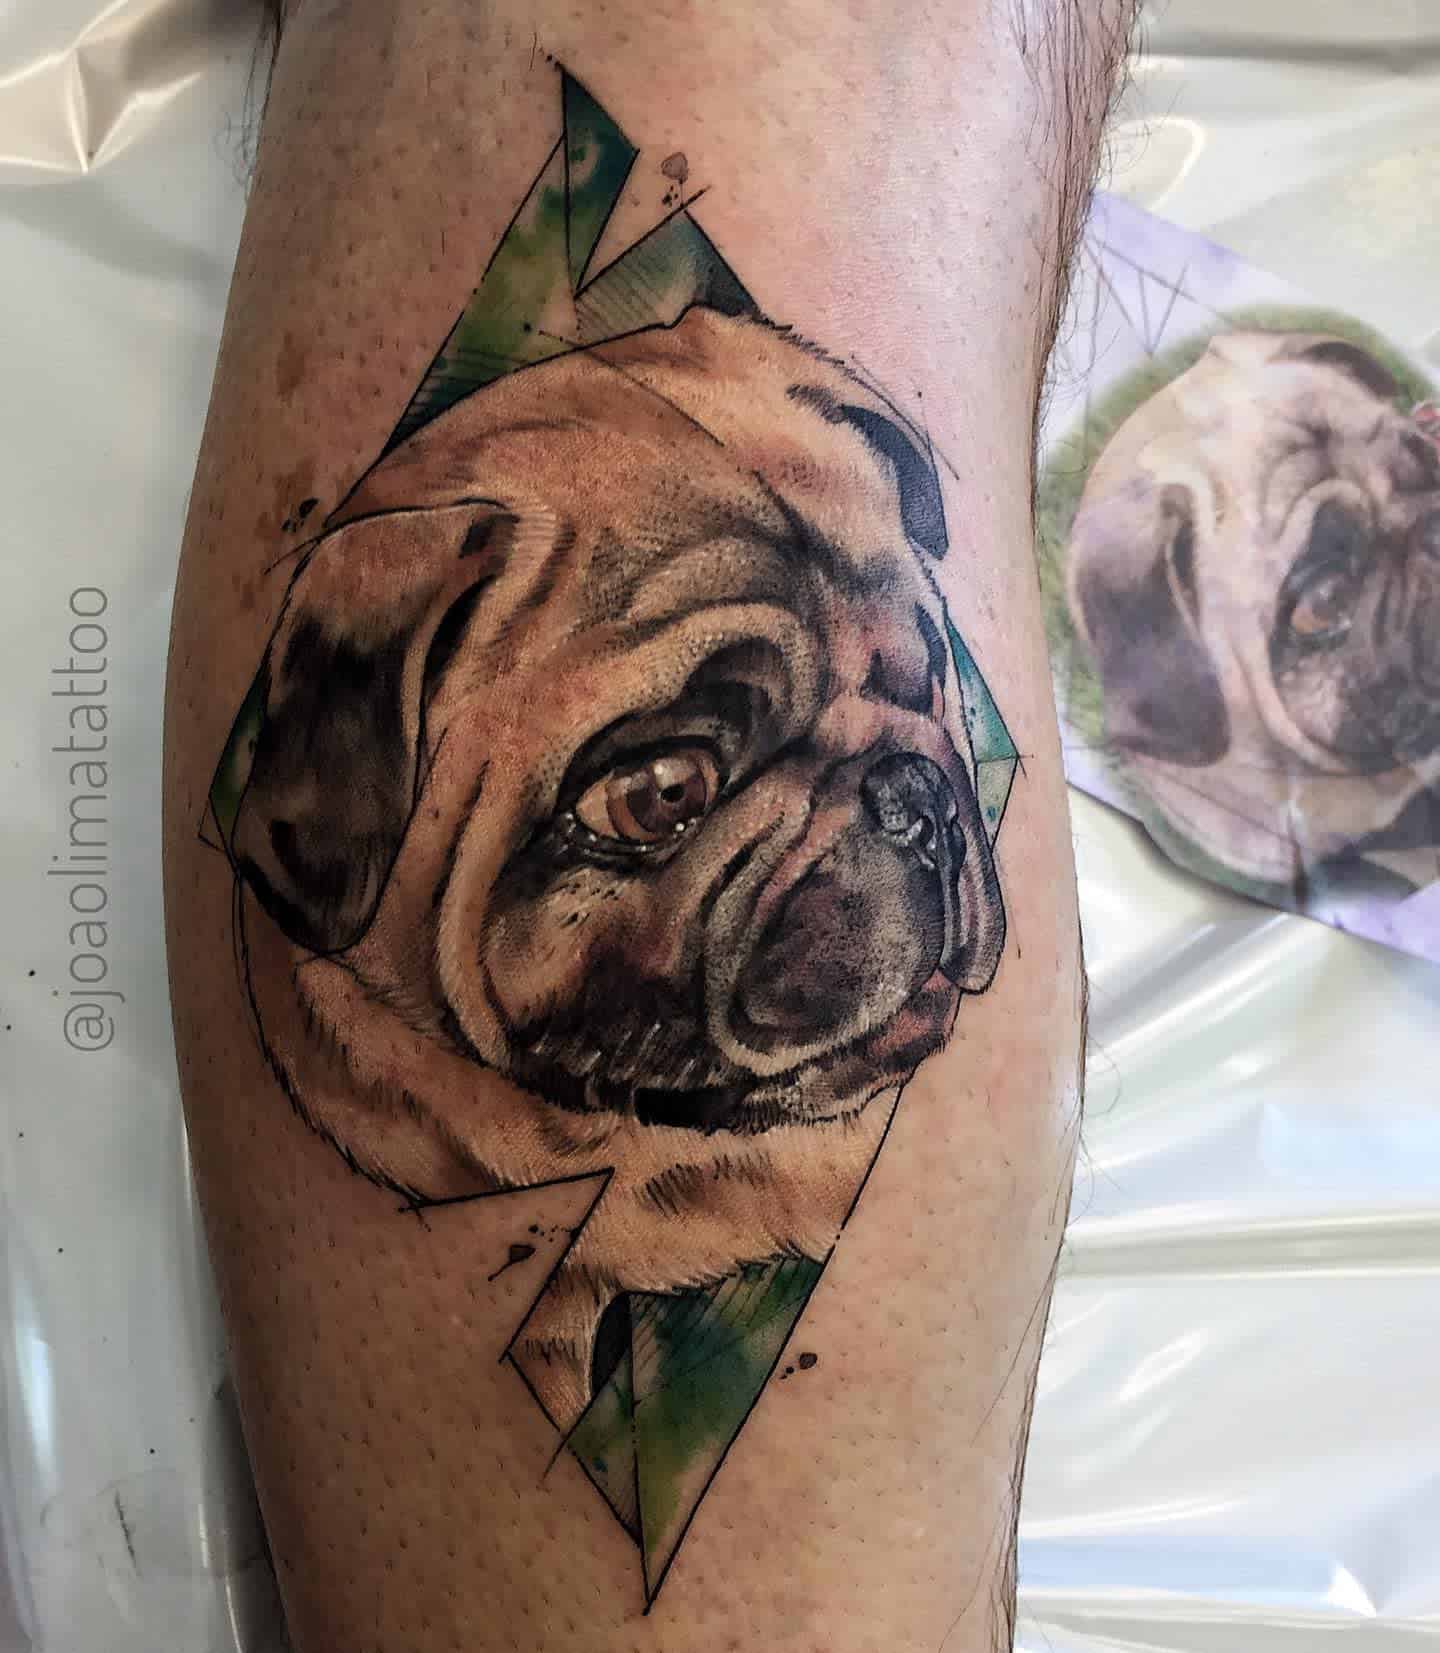 Pug tattoo small realistic fineline on forearm by Alexandyr valentine | Pug  tattoo, Pug tattoo small, Small tattoos